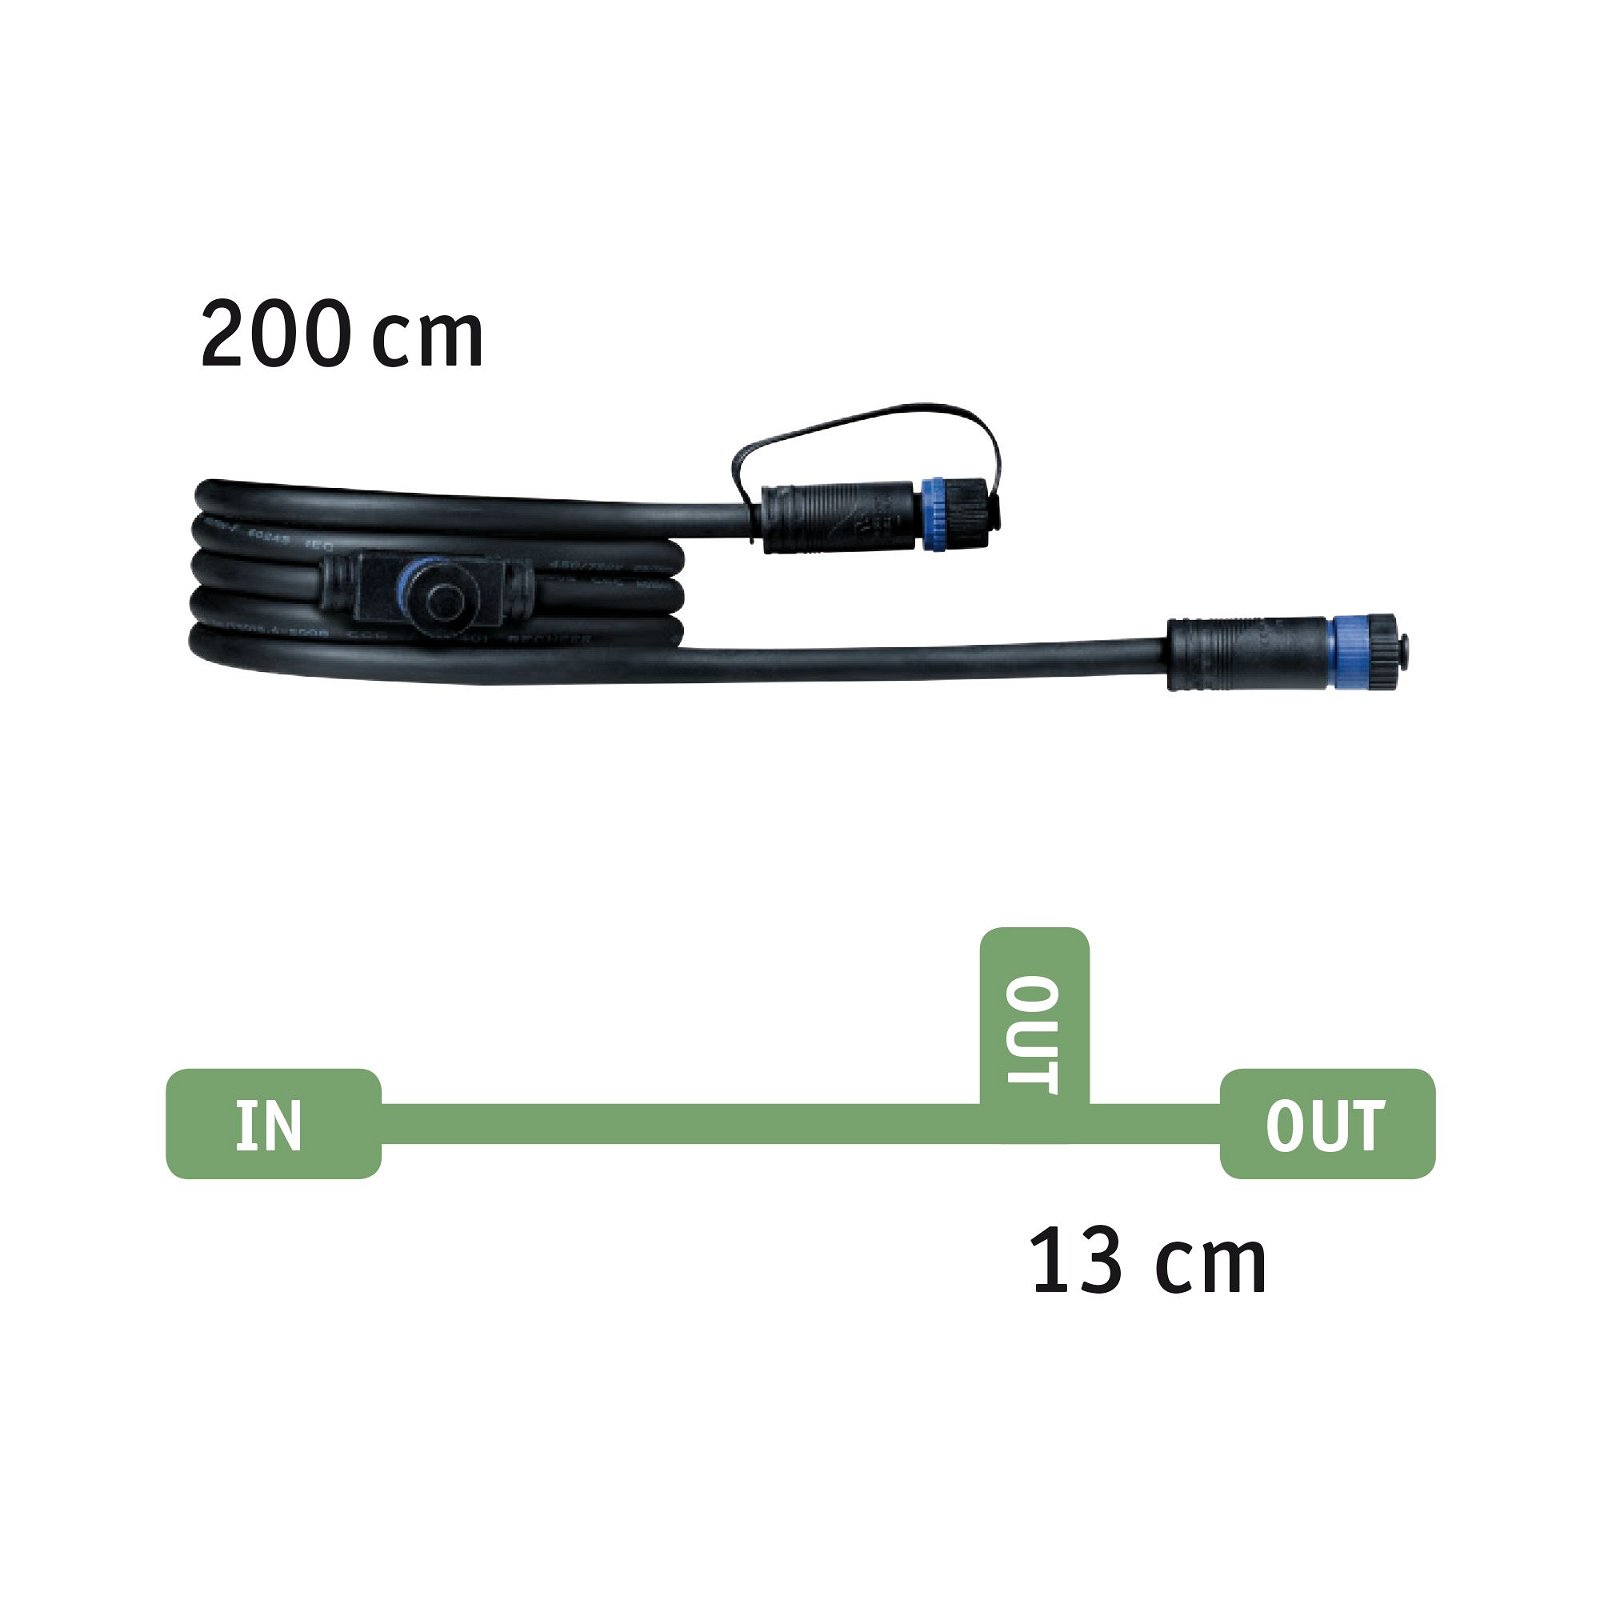 Plug & Shine Câble 2m 2 sorties IP68 Noir